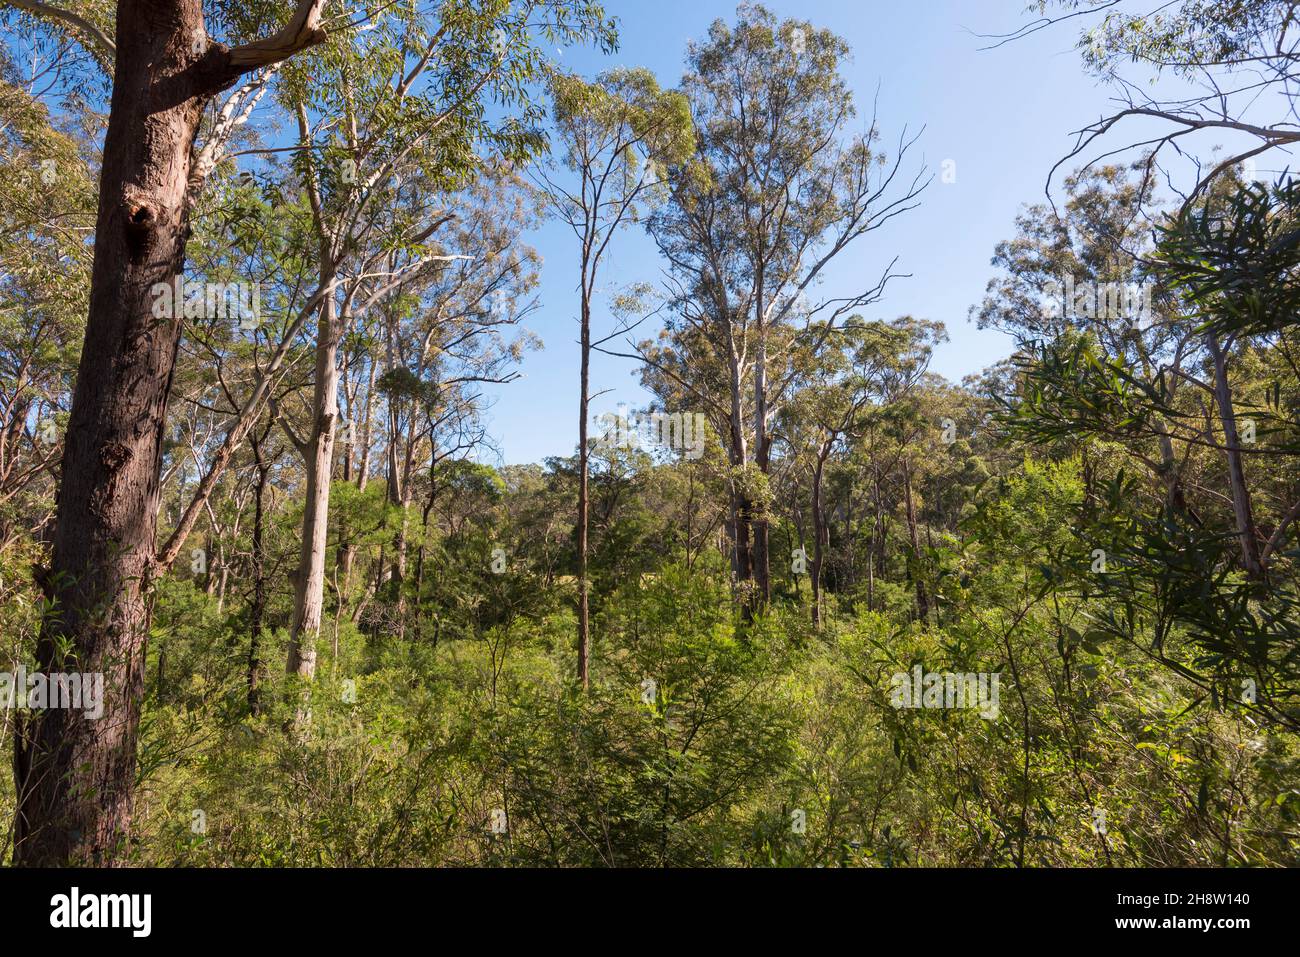 Blackbutt (Eucalyptus pilularis) trees, centre and left with understory plants Common Hopbush (Dondonea triquetra) and Flax Wattle (Acacia linifolia) Stock Photo